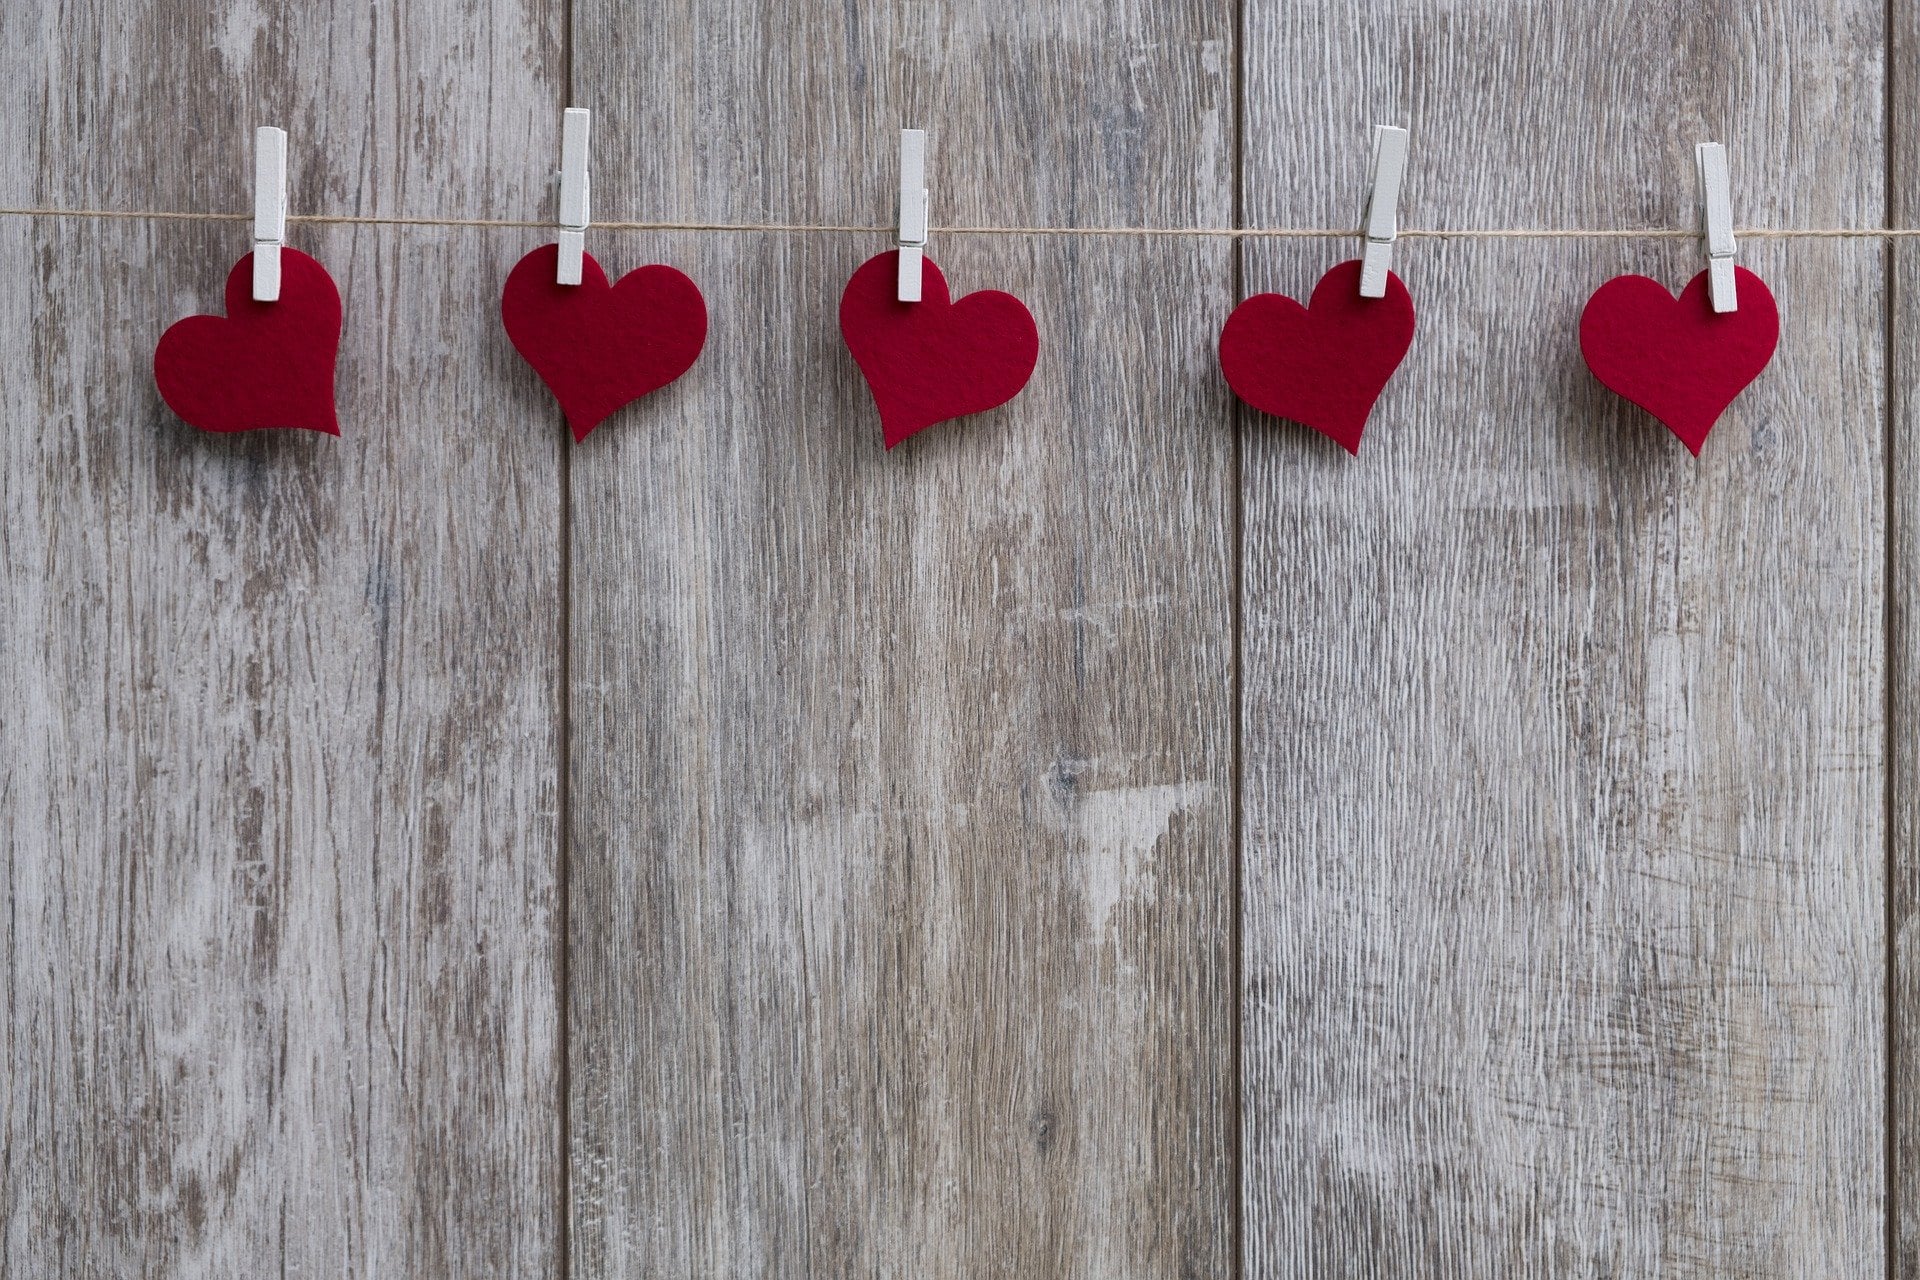 Technology Gadgets 20 Valentines Day Desktop Backgrounds That